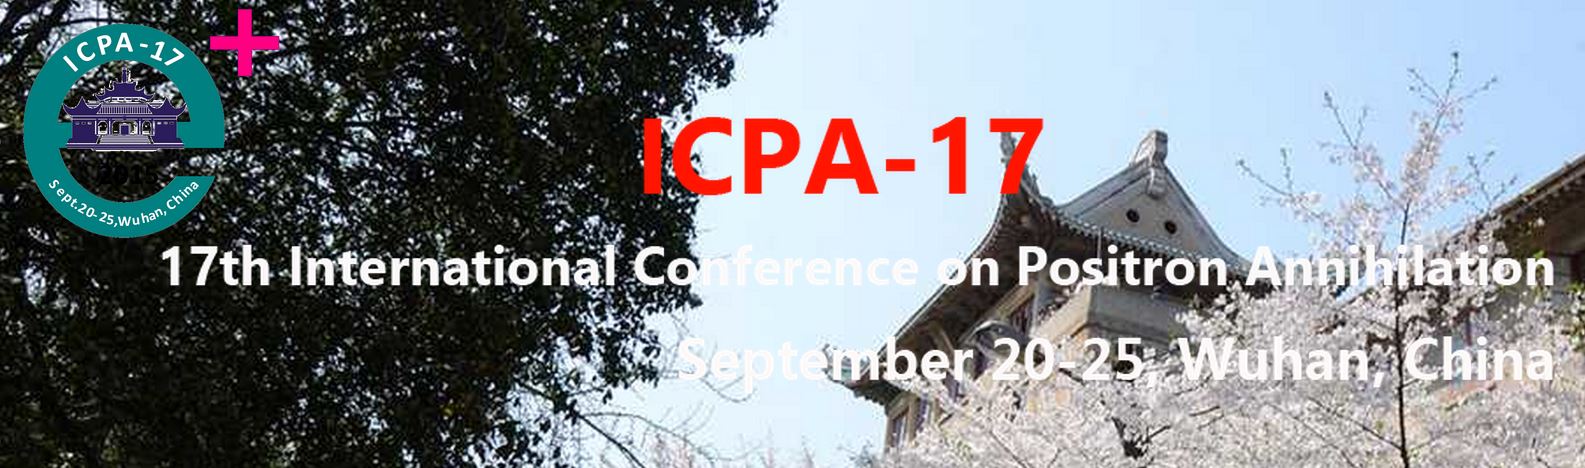 Web Mirror Page of ICPA-17